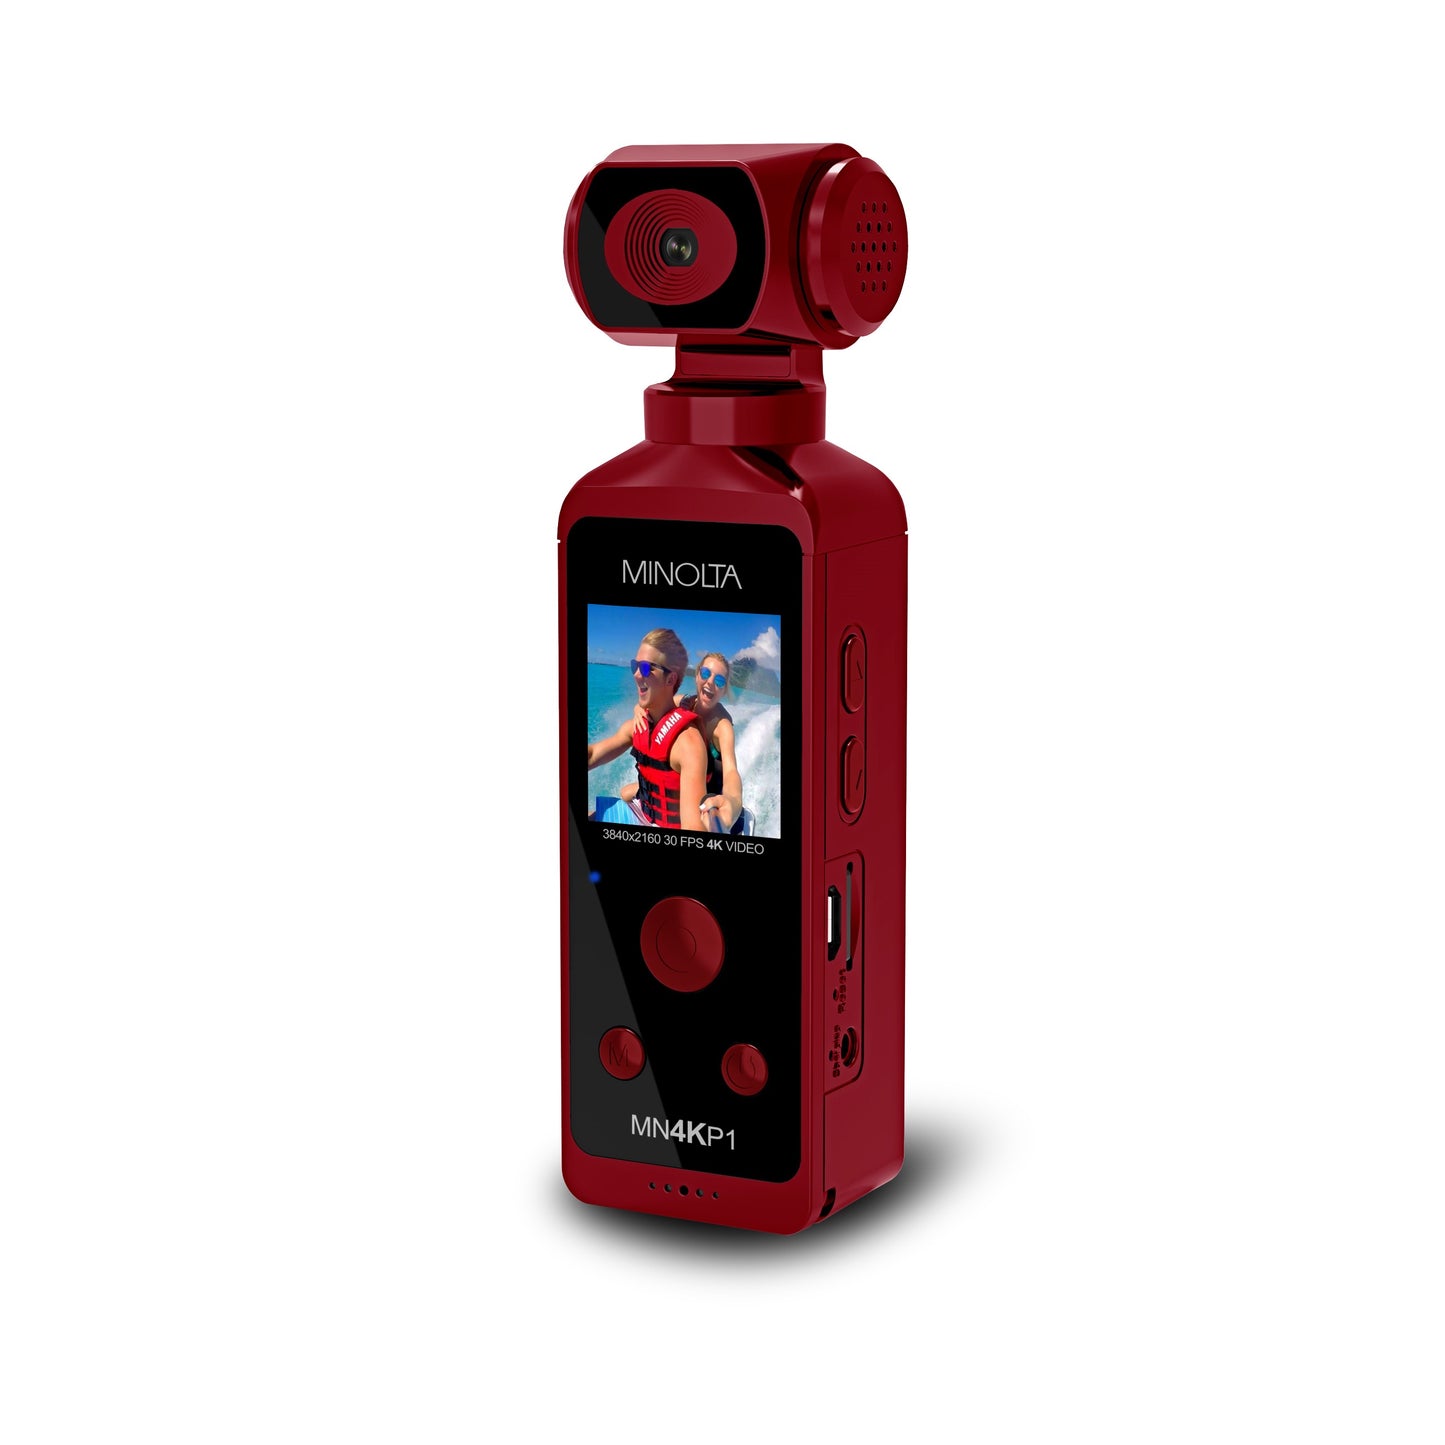 MN4KP1 4K Ultra HD Pocket Camcorder with WiFi & Waterproof Housing